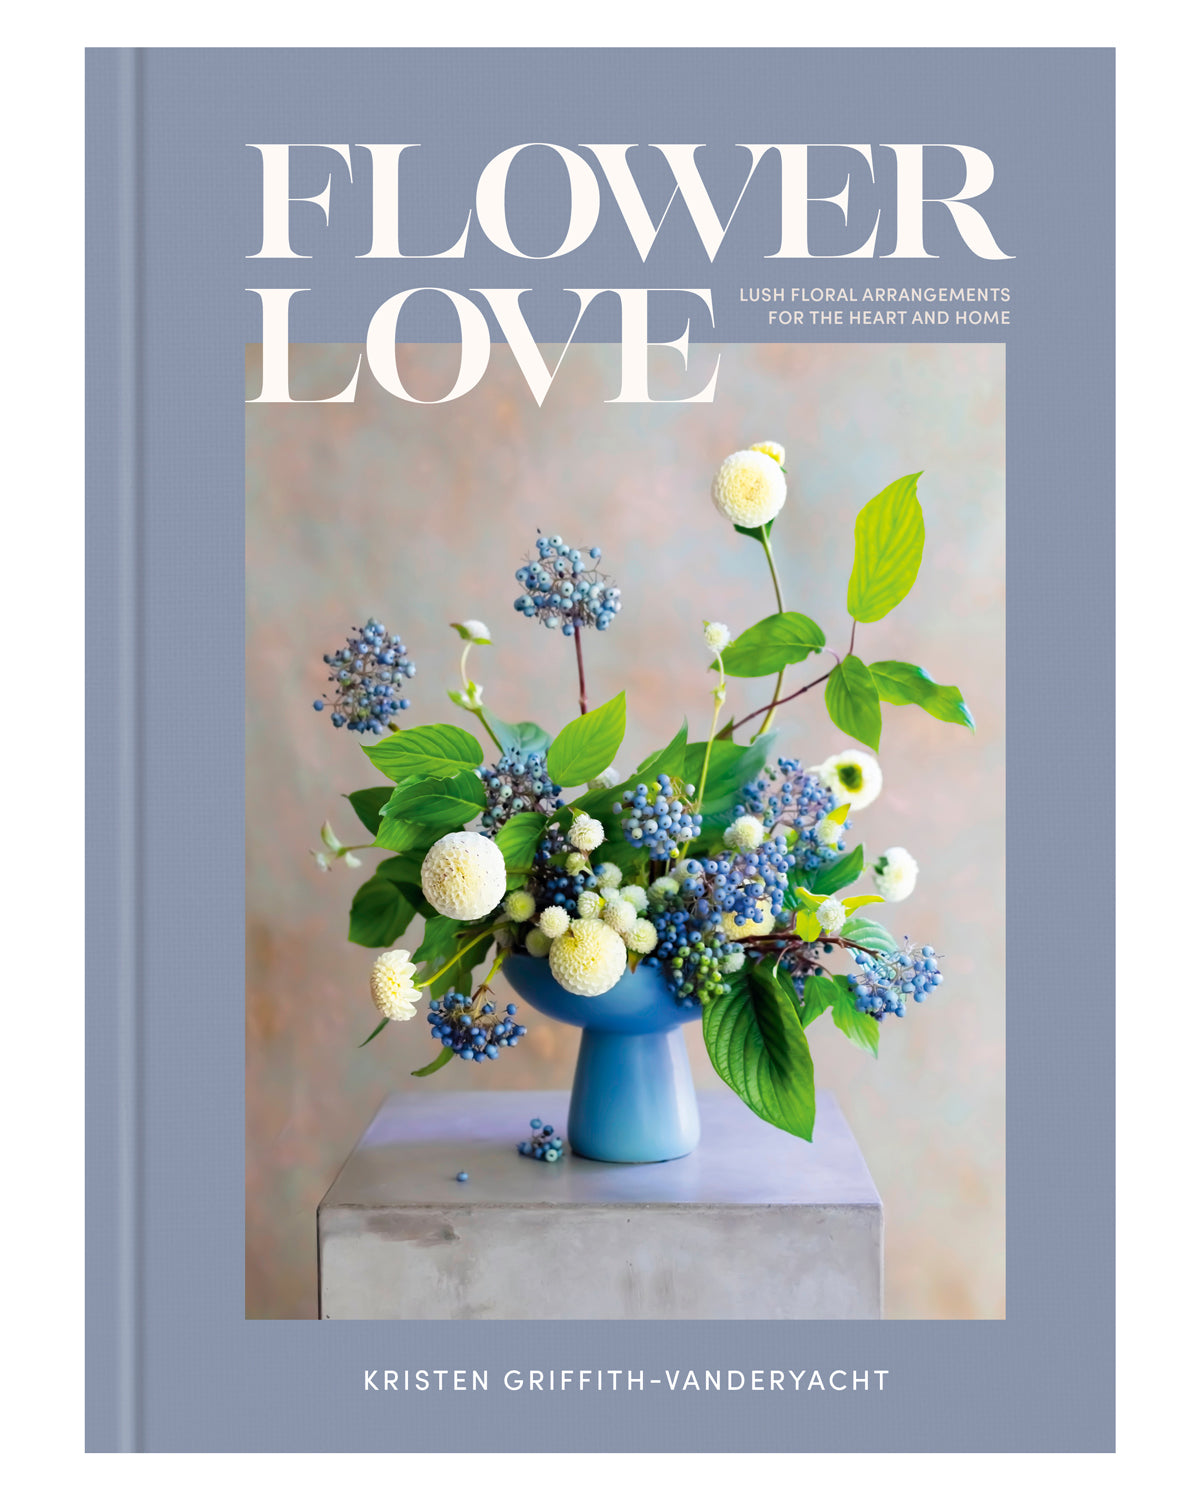 Book Signing Event: "Flower Love" by Kristen Griffith-VanderYacht